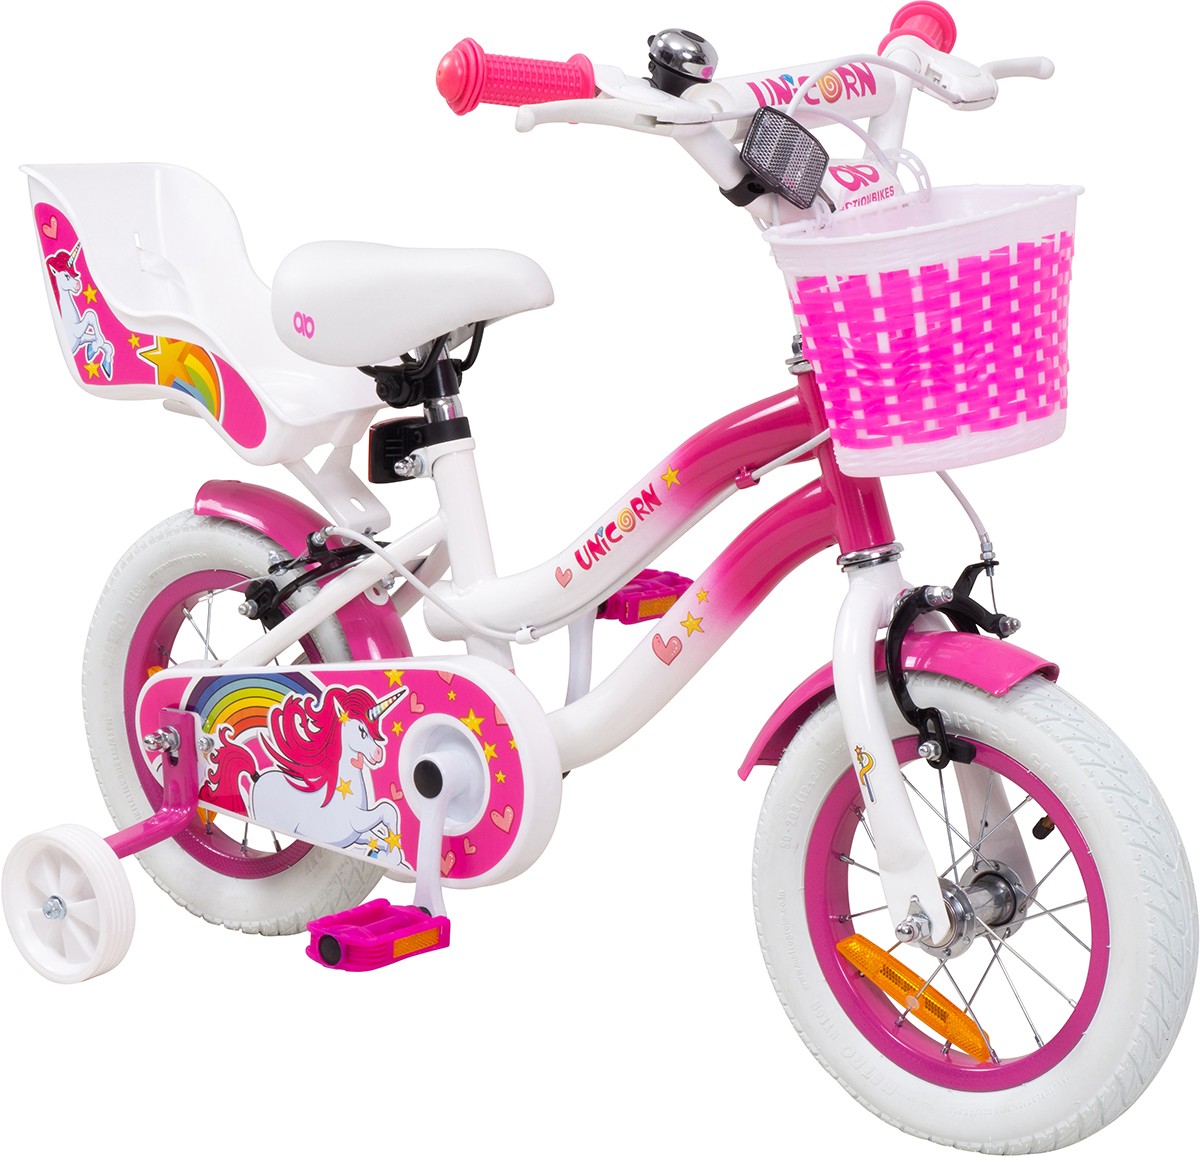 01-kinderfahrrad-pink-12-zoll-actionbikes-motors-unicorn-vorne-rechts